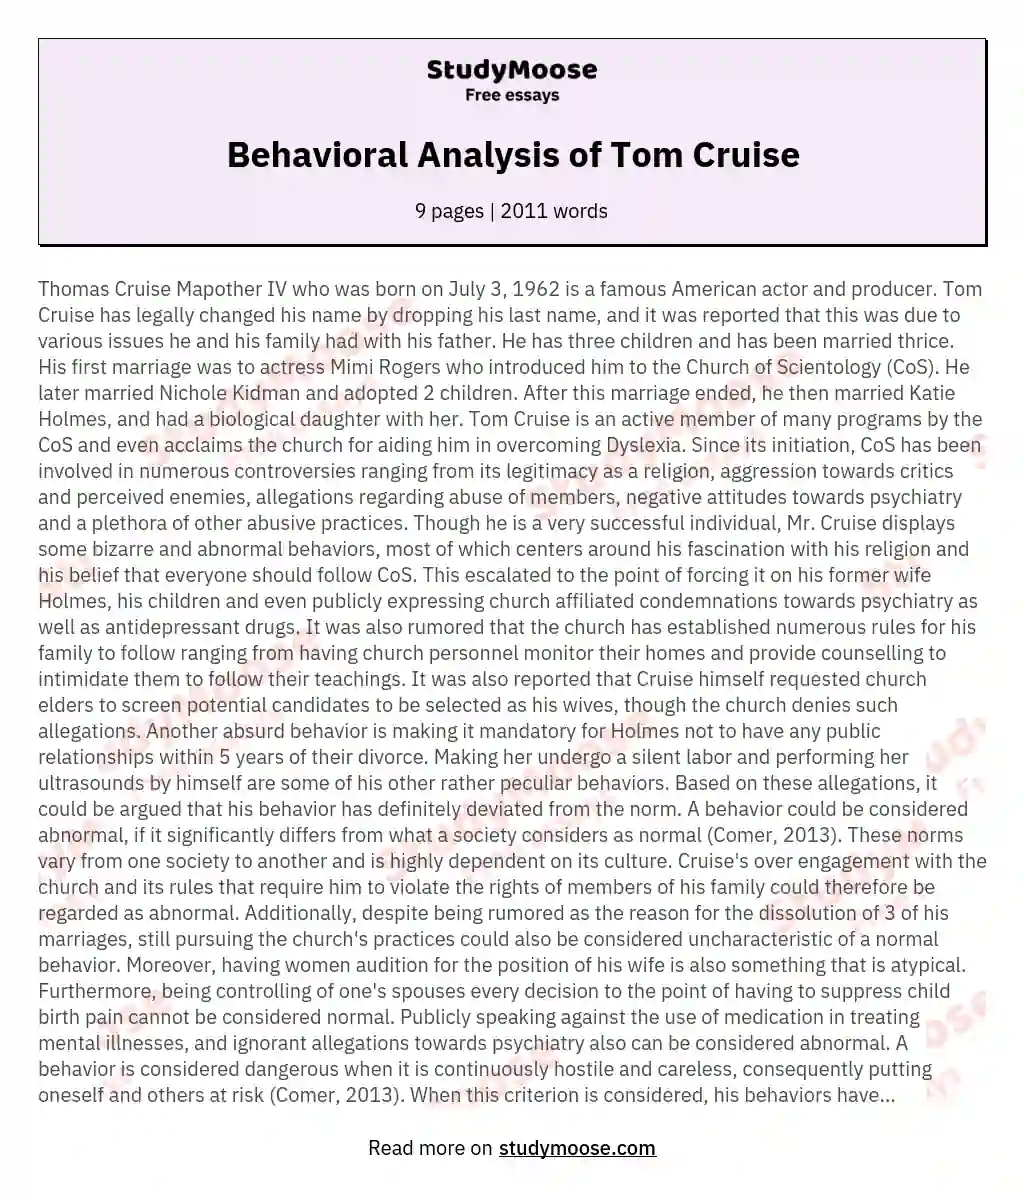 Behavioral Analysis of Tom Cruise essay